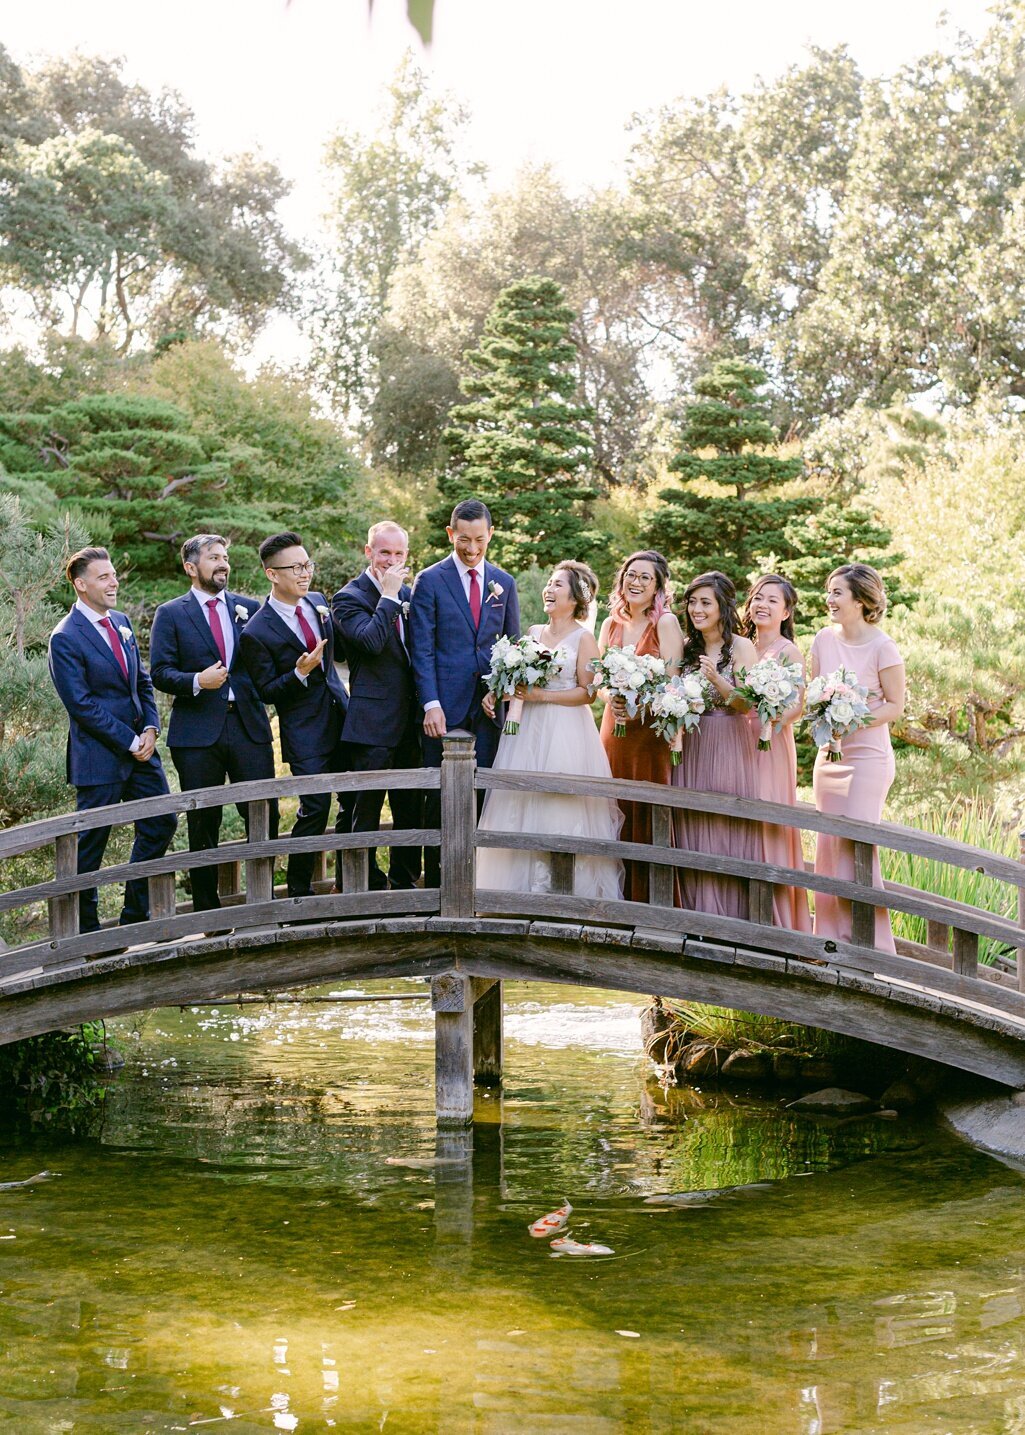 Jessie-Barksdale-Photography_Hakone-Gardens-Saratoga_San-Francisco-Bay-Area-Wedding-Photographer_0054